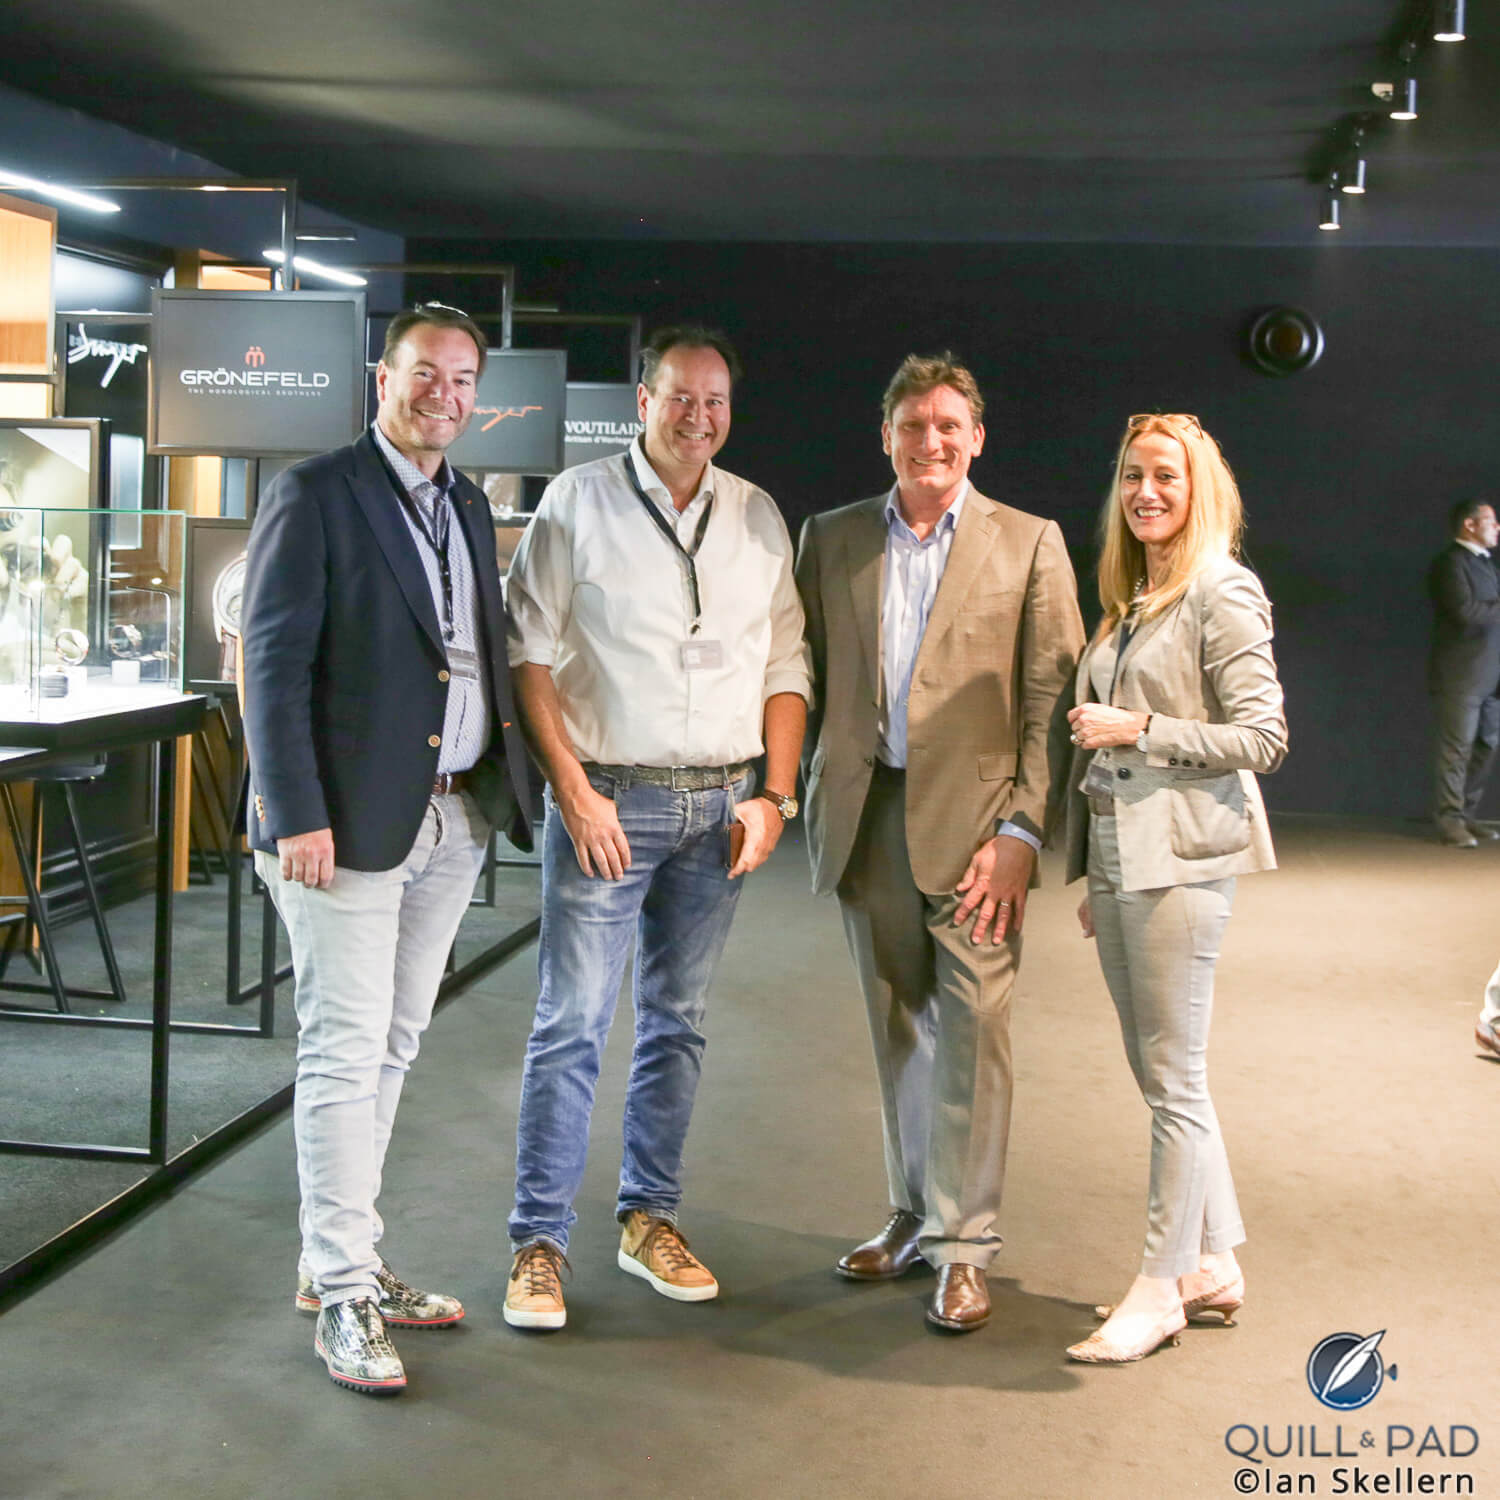 Left to right: Bart and Tim Grönefeld (Grönefeld Watches), Stephen Forsey (Greubel Forsey), and Christine Hutter (Moritz Grossmann) at Dubai Watch Week 2017